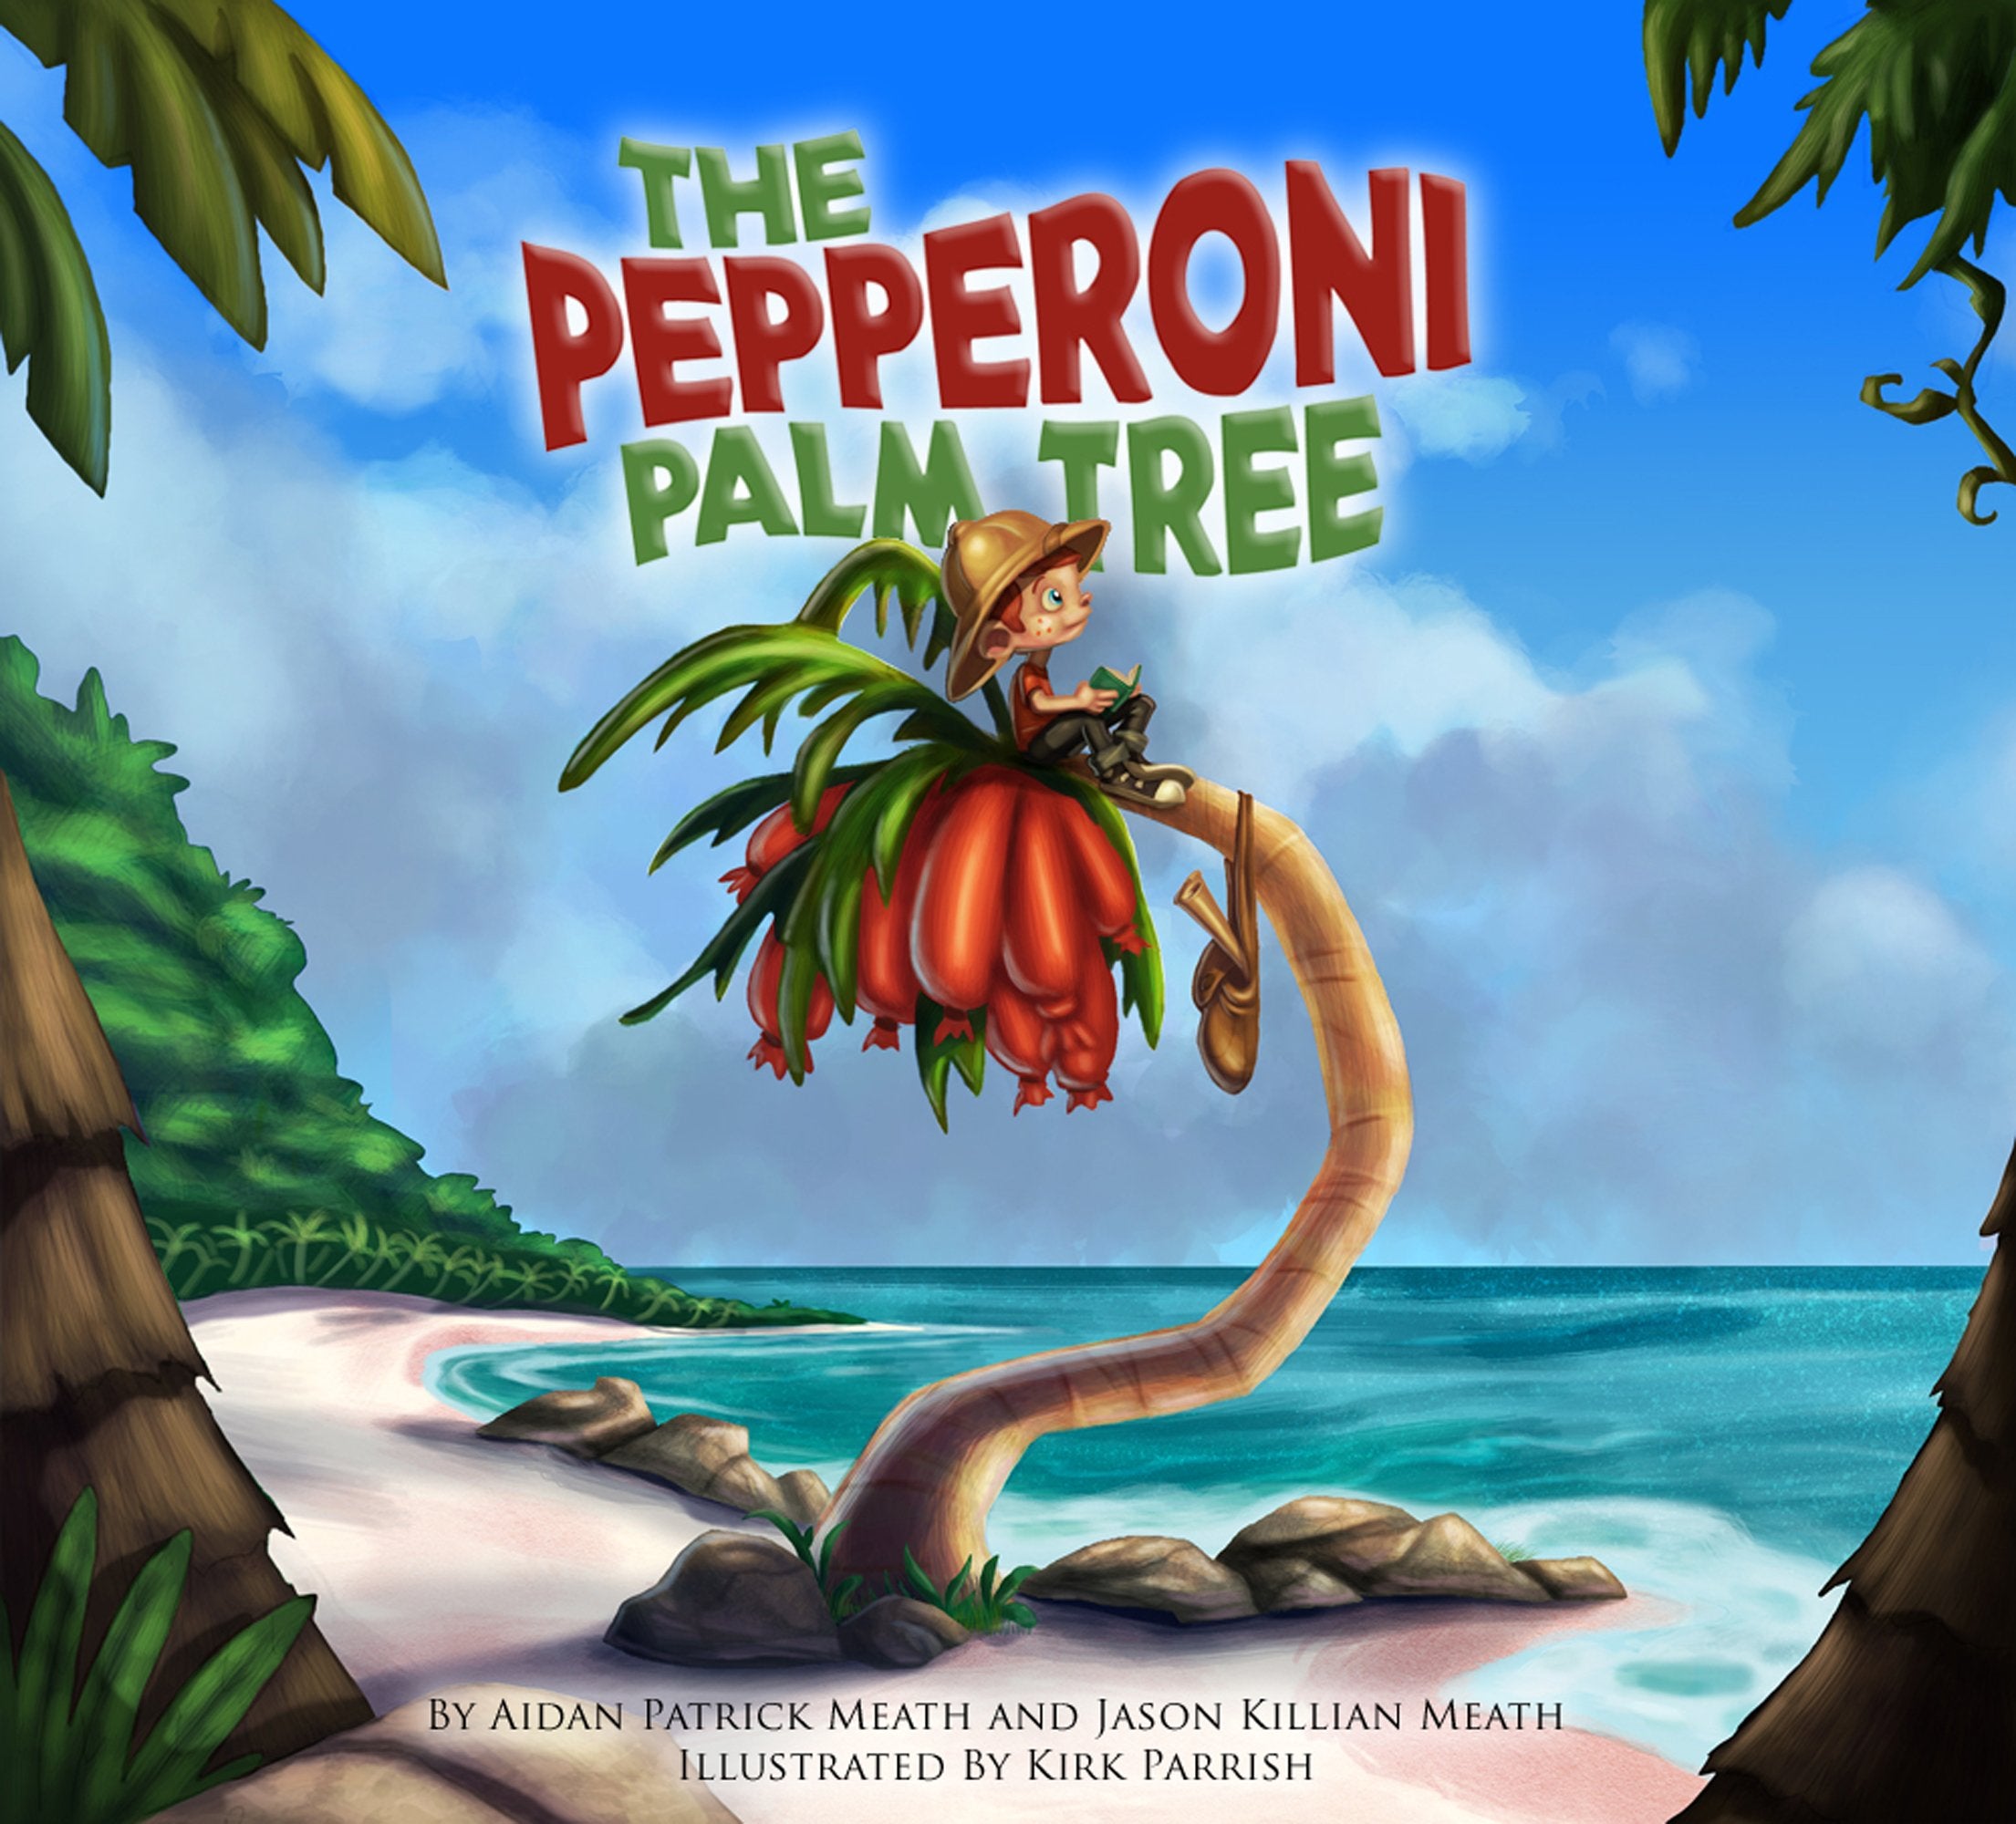 The Pepperoni Palm Tree